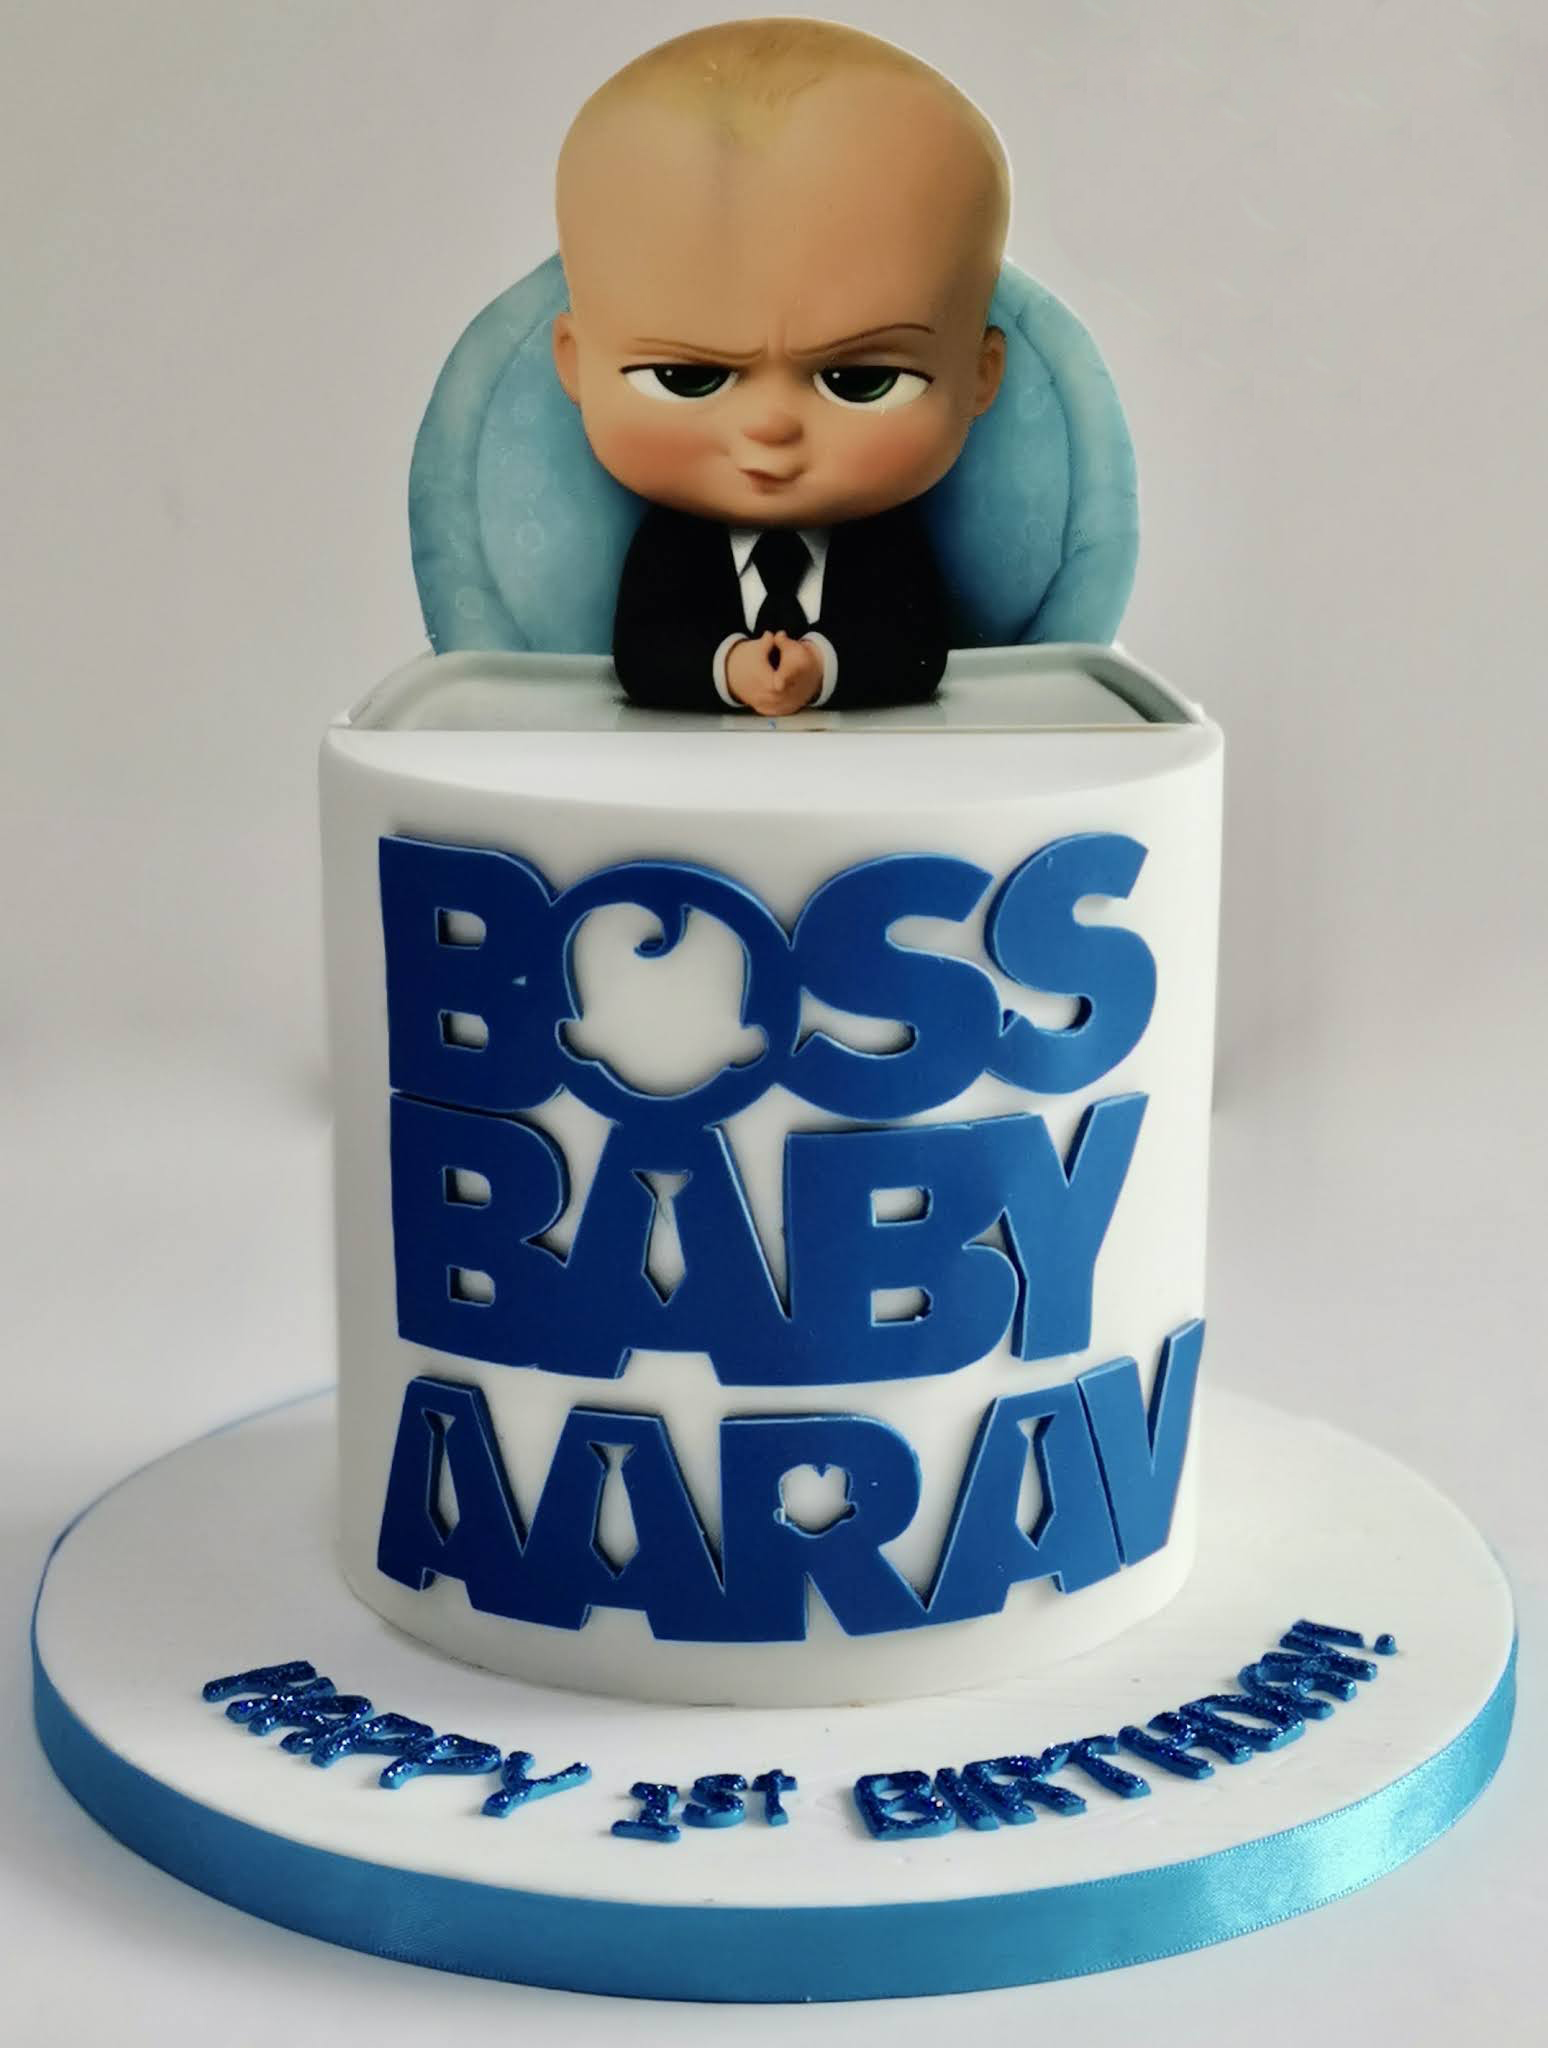 Add Boss baby Theme cake